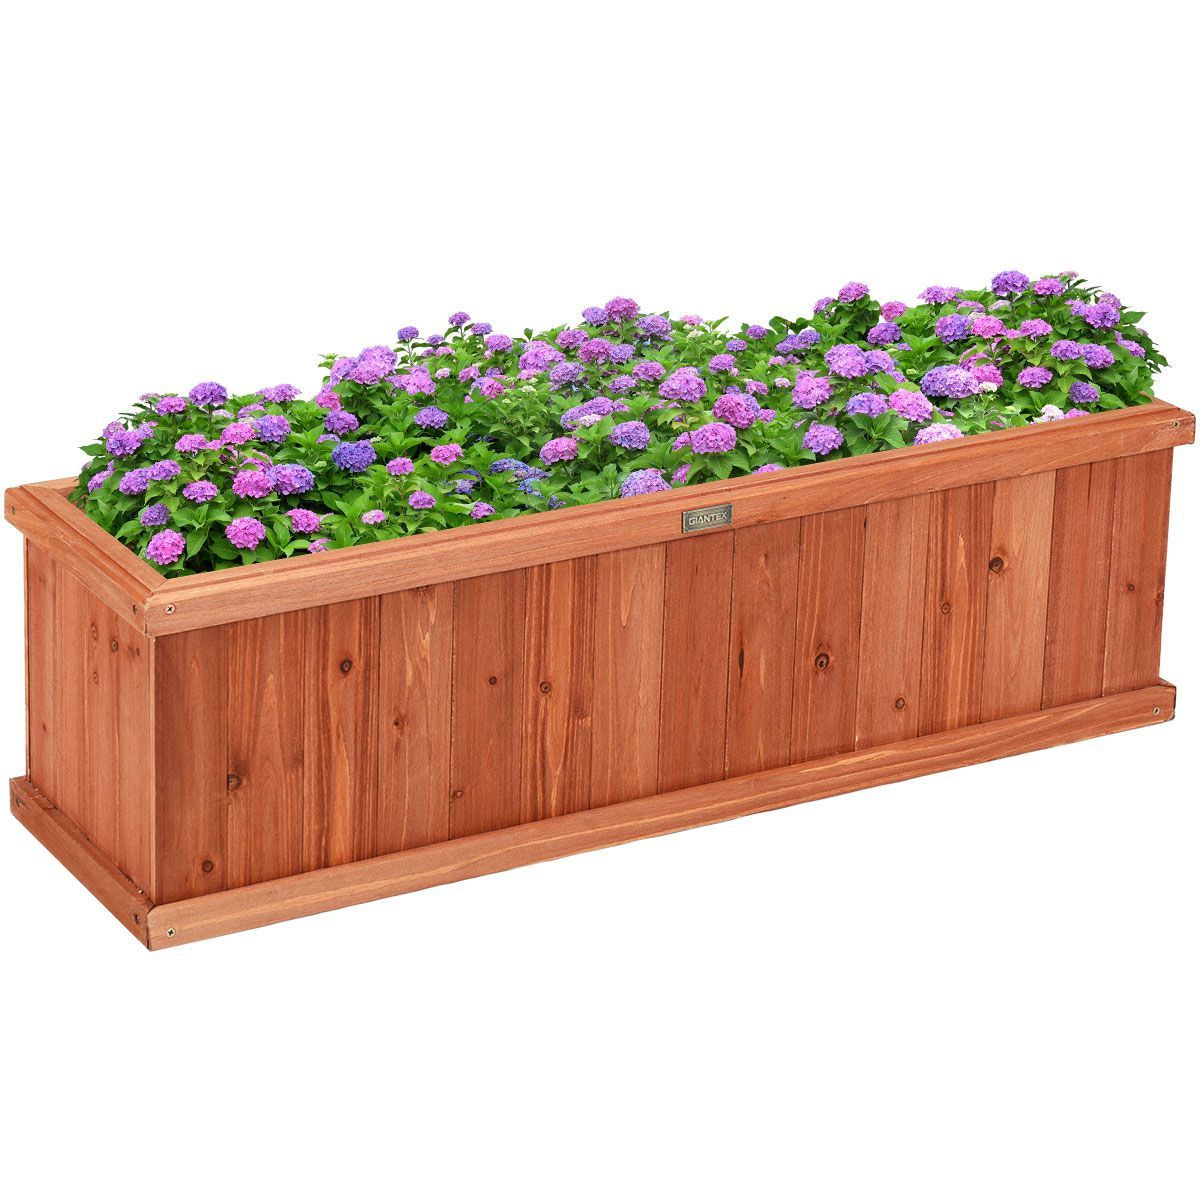 28/36/40 Inch Wooden Flower Planter Box Garden Yard Decorative Window Box Rectangular | Target